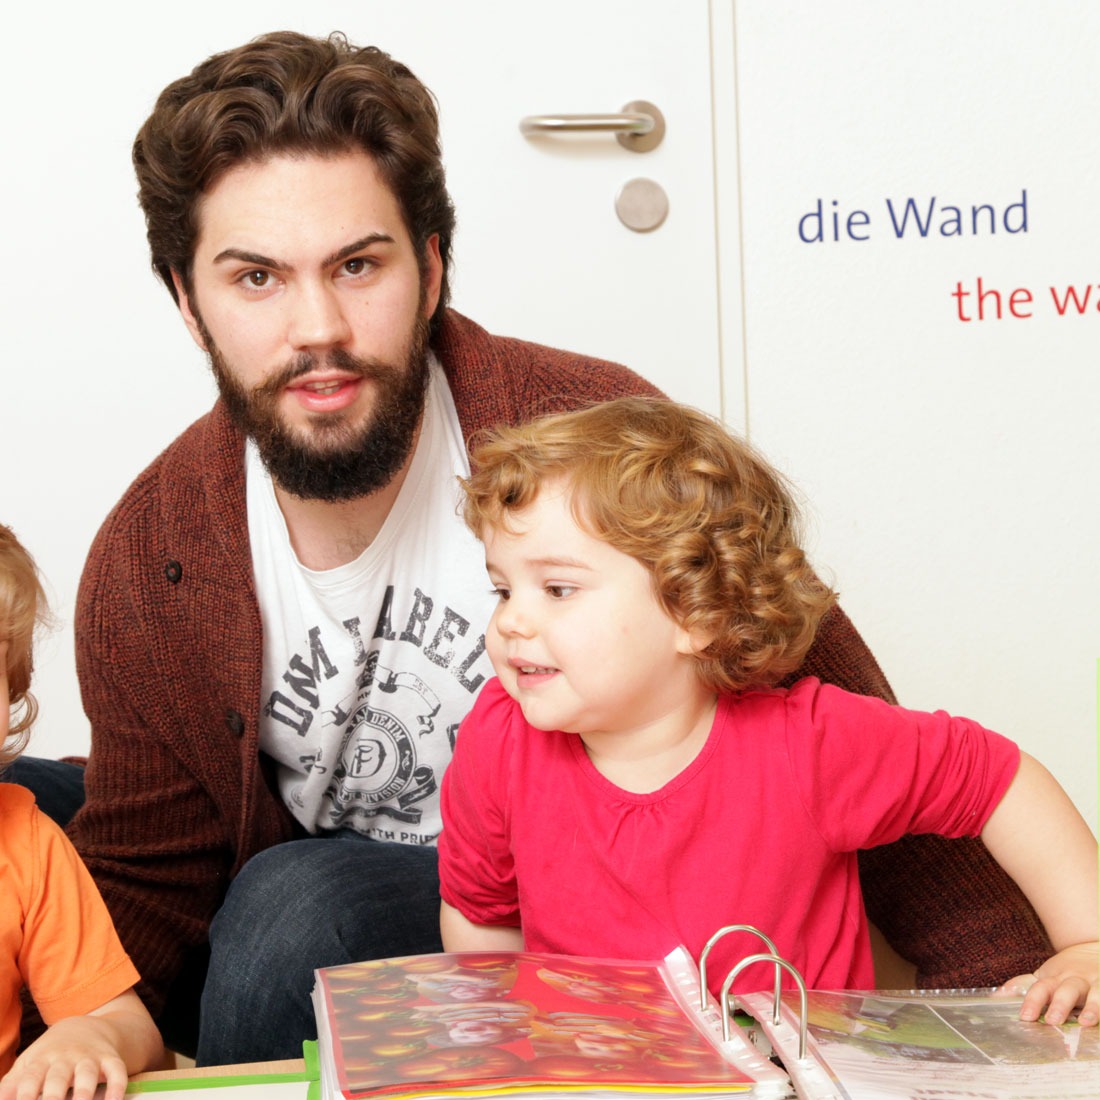 Bild 6 Kids & Co. Unterlindau - pme Familienservice in Frankfurt am Main